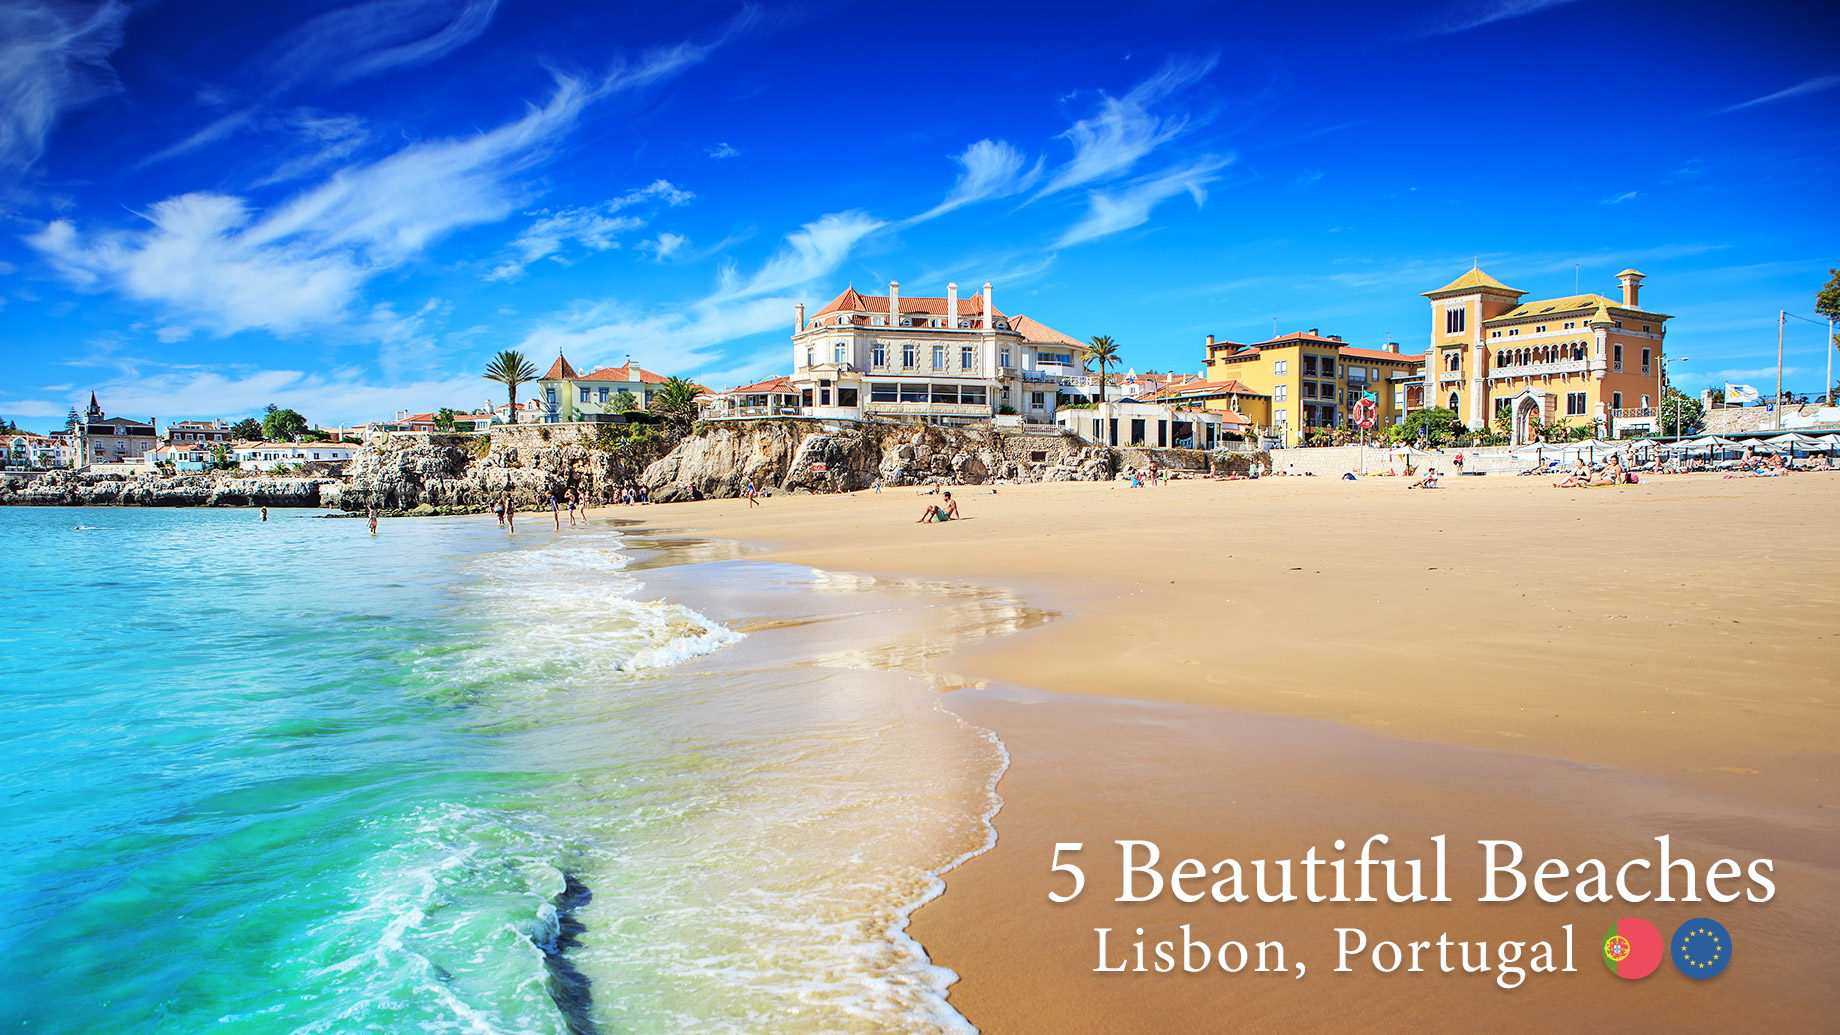 5 Beautiful Beaches In Lisbon, Portugal